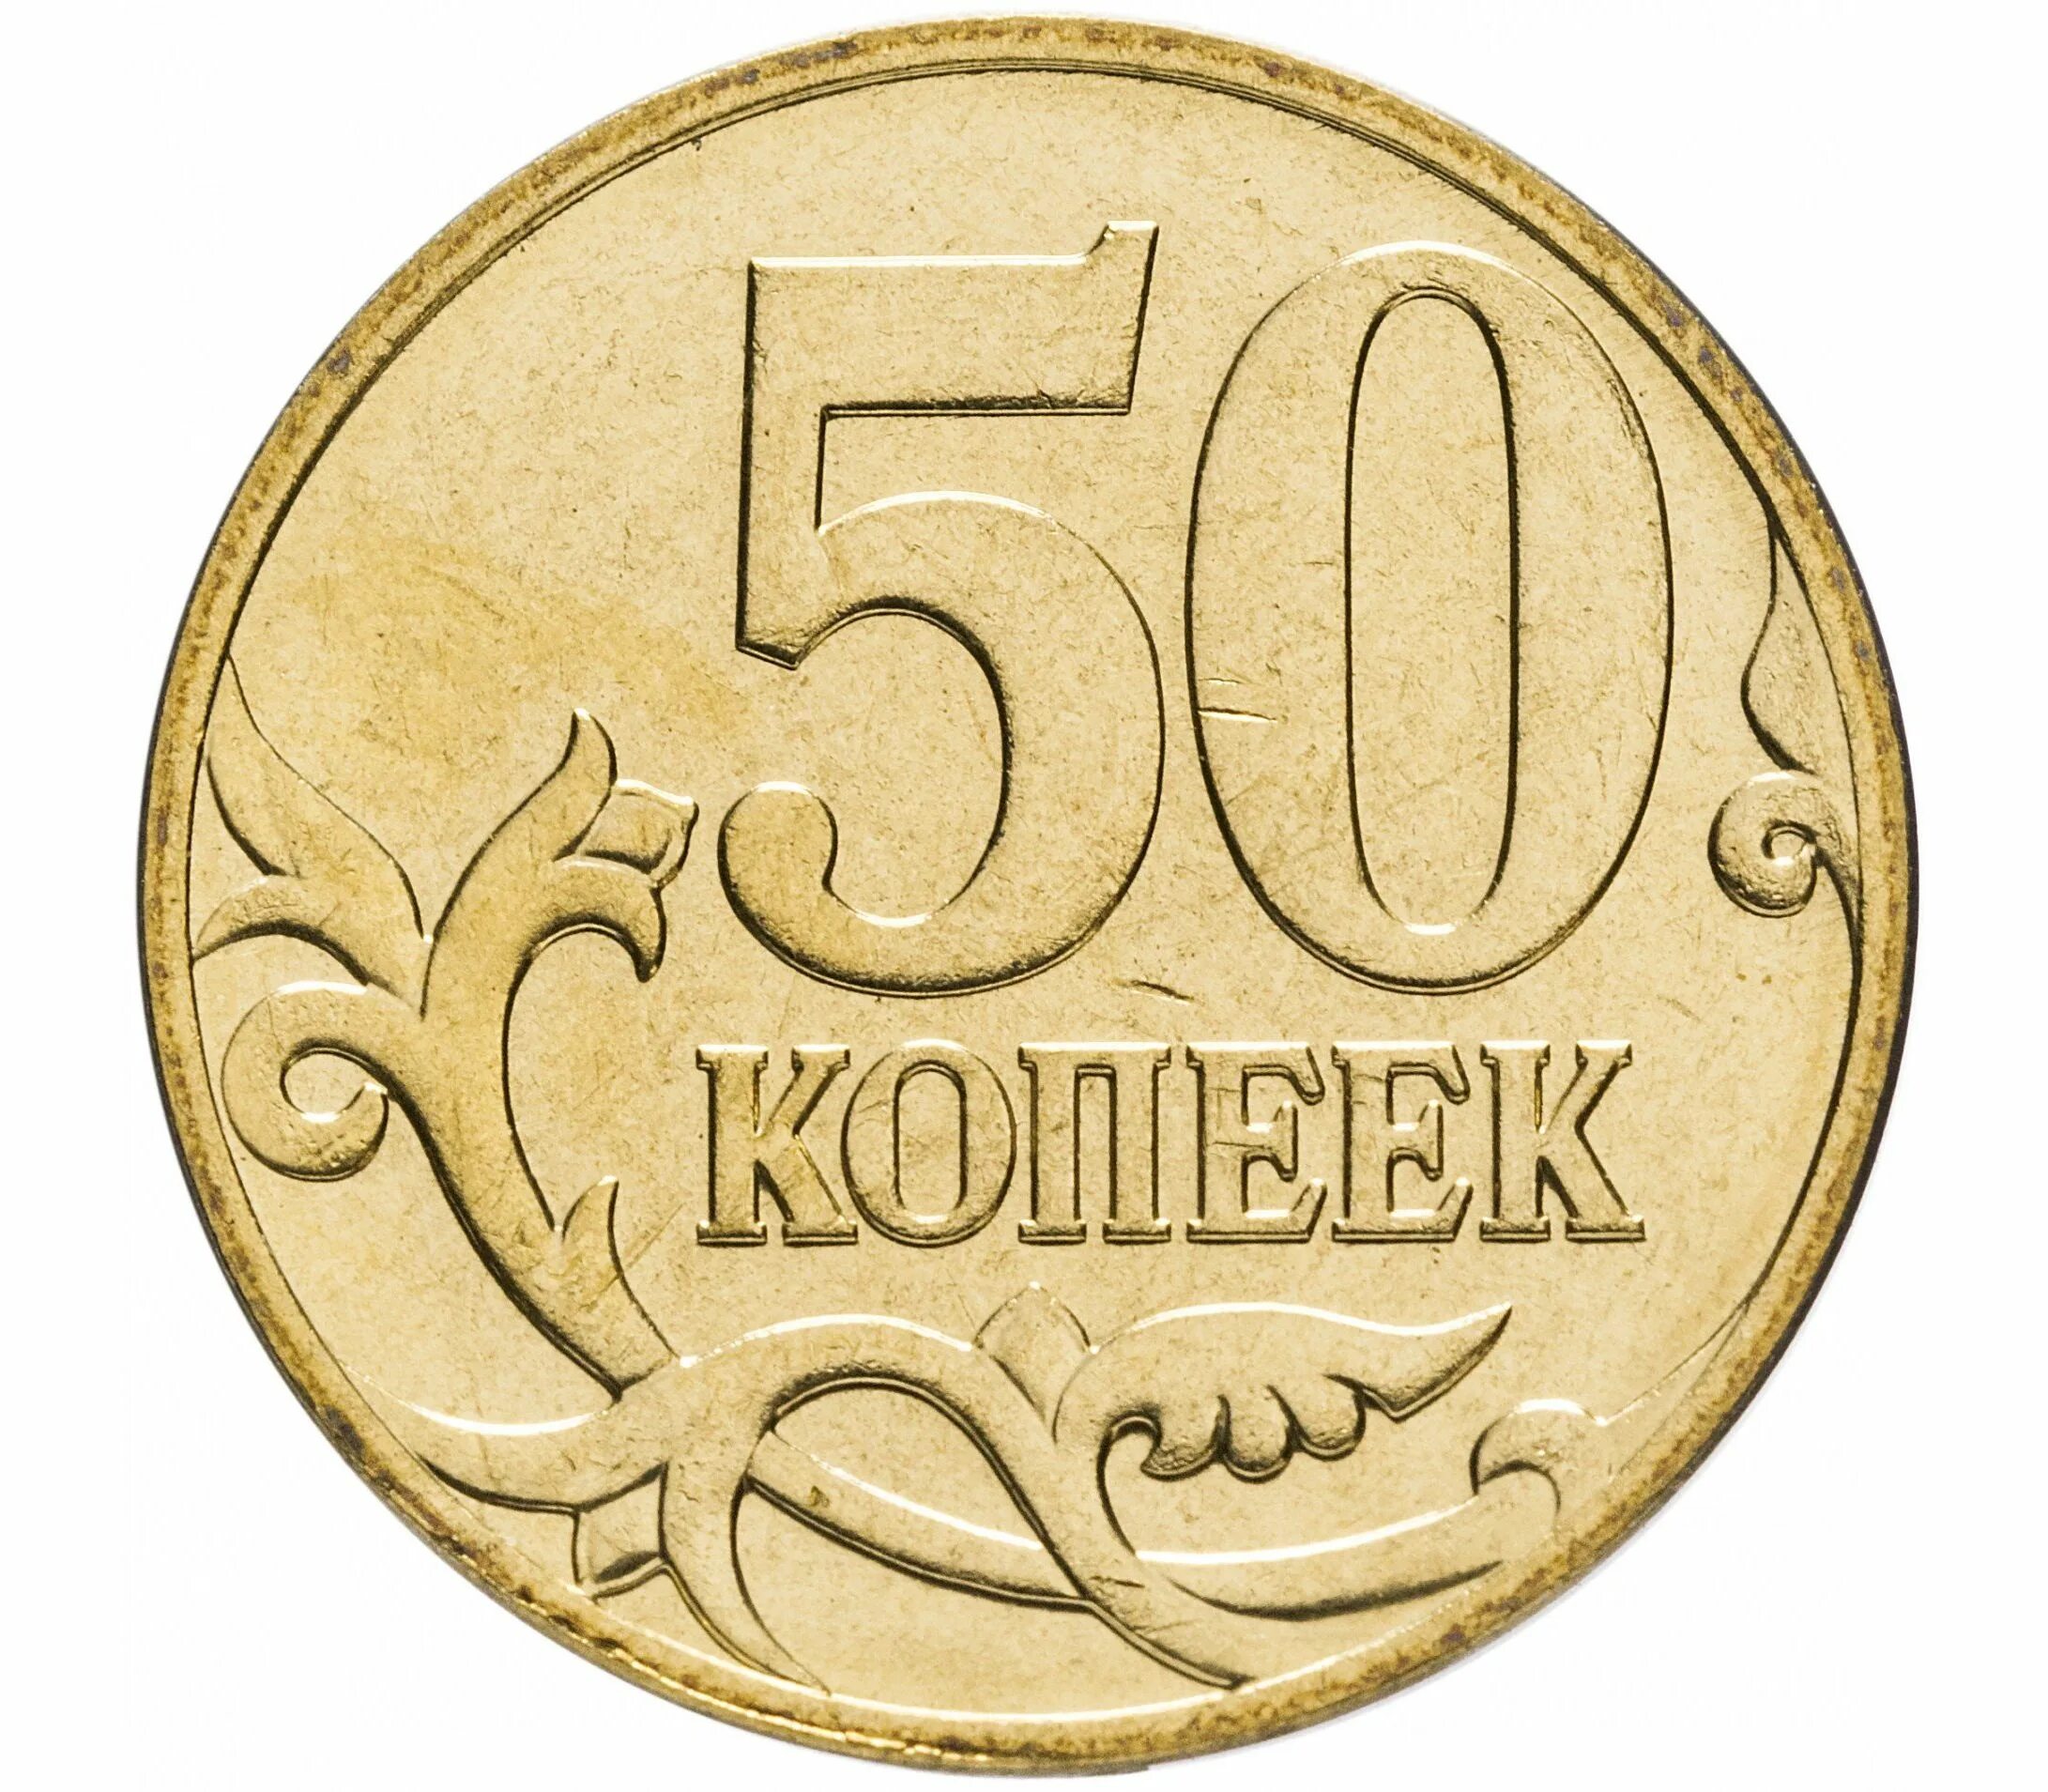 Монета пятьдесят копеек пятьдесят лет. Ценные монеты копейки 50 копеек. 50 Копеек 2007 года. 50 Копеек 2007 м. Монеты номиналом 50 копеек.